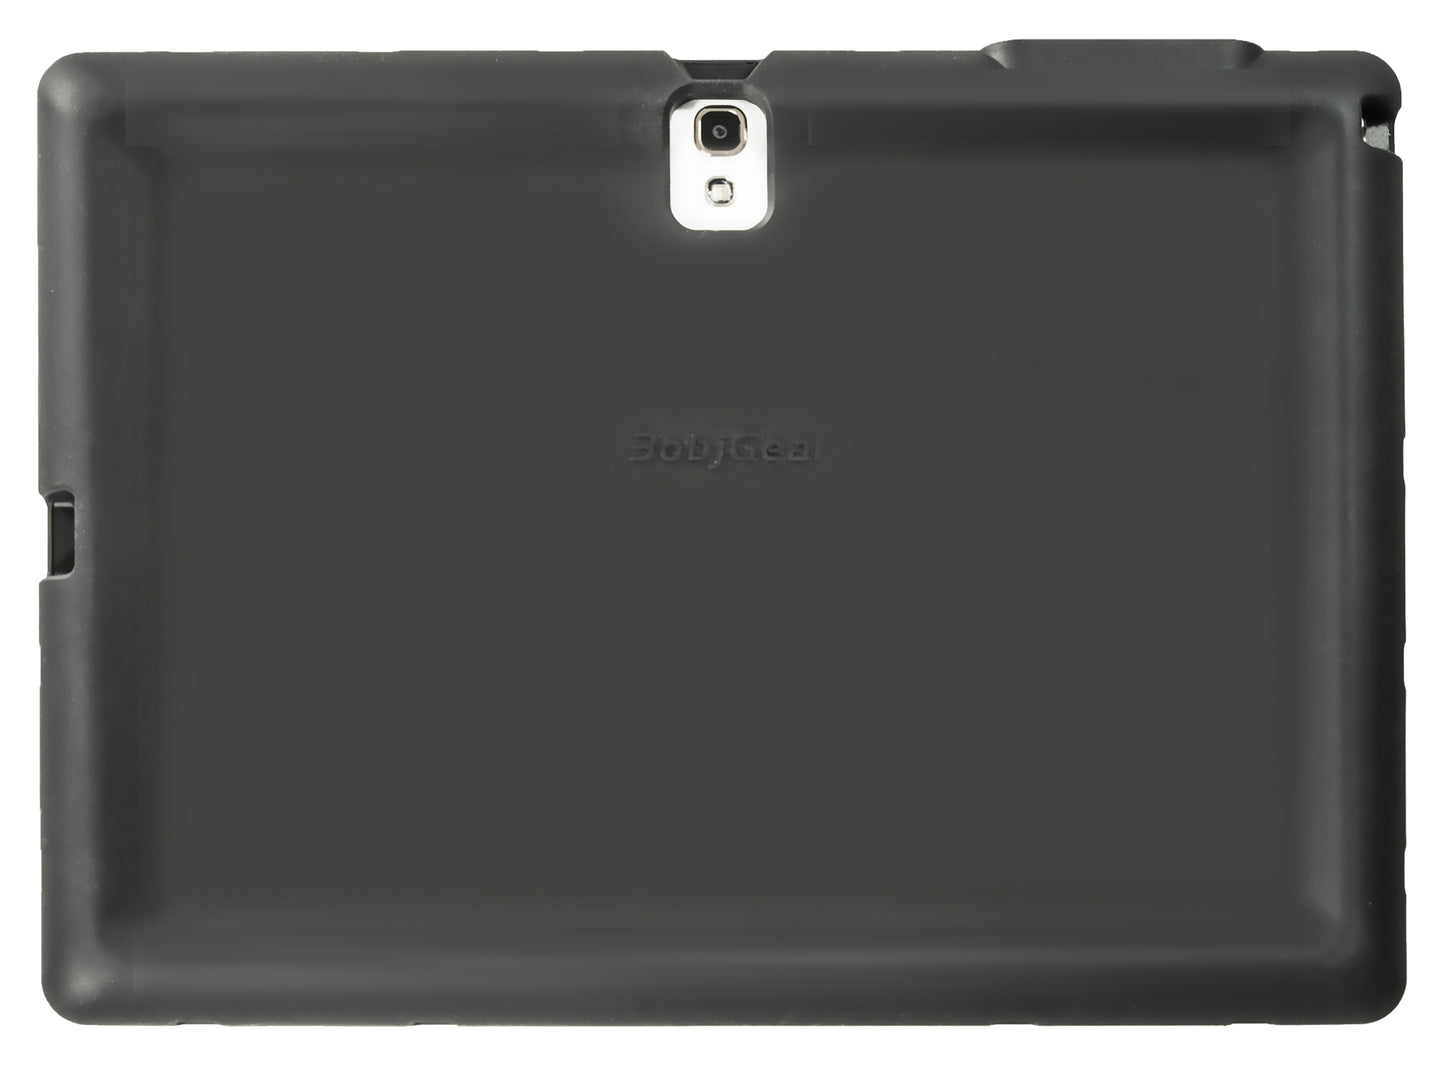 Bobj Rugged Tablet Case for Samsung Galaxy Tab S 10.5 Tablet Models SM-T800, SM-T805, SM-T807- Bold Black